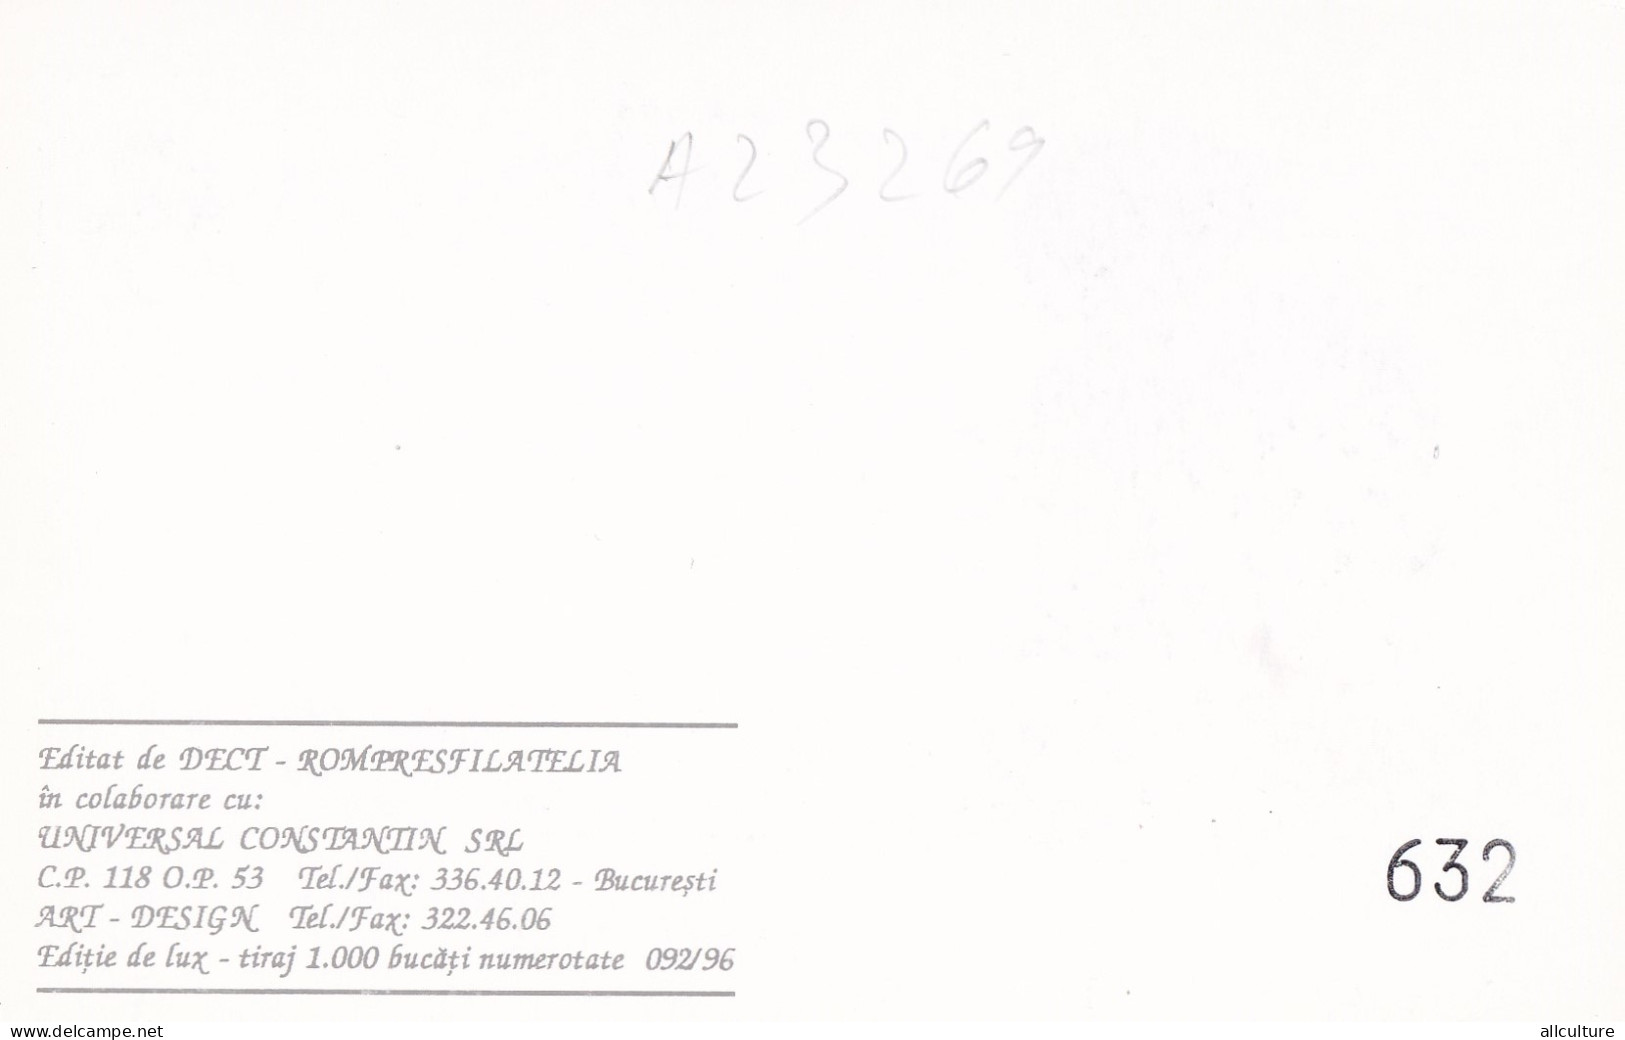 A23268  -MUSHROOM  Champignons  "PLEUROTUS OSTREATUS  " Entier Postal,stationery Card  1996  - Champignons